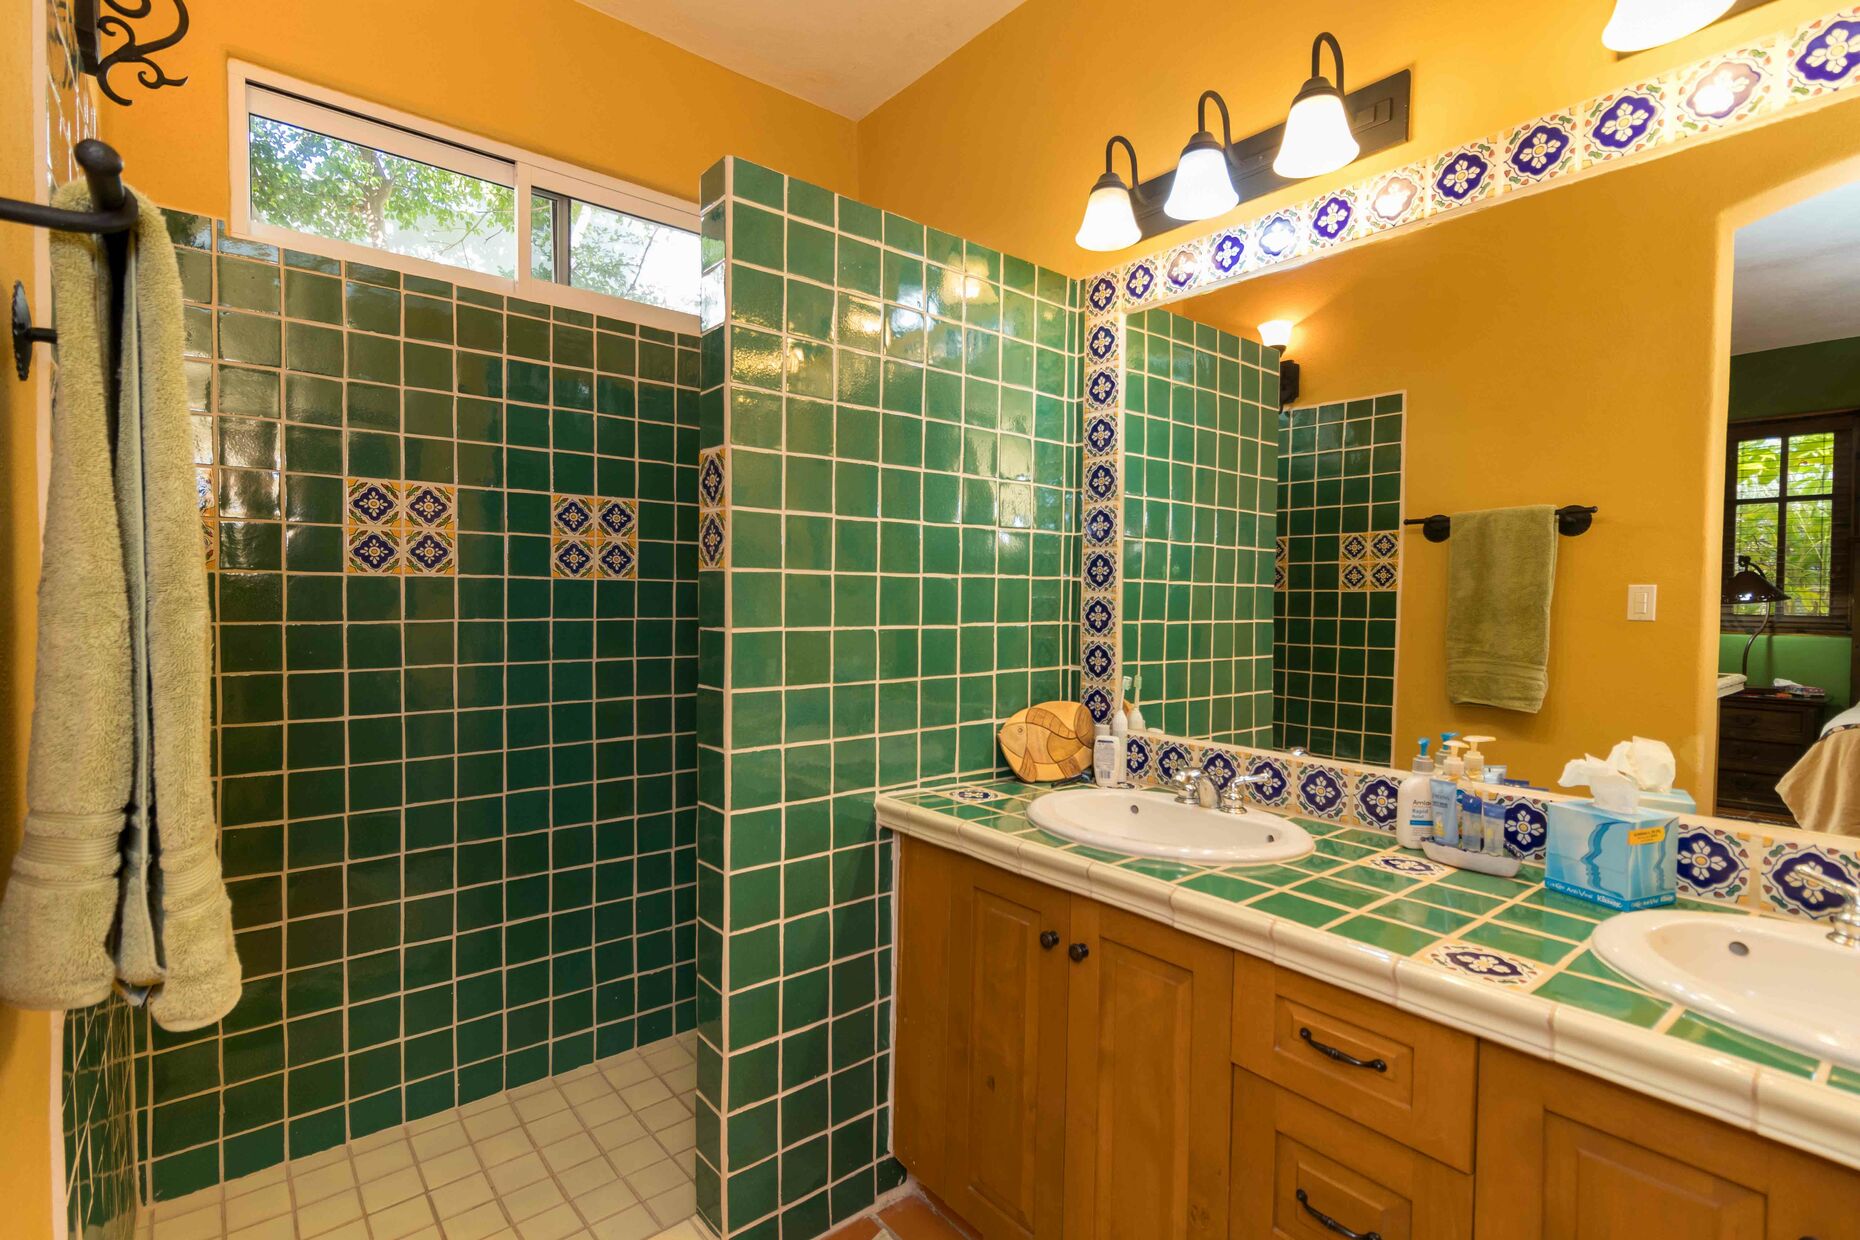 Downstairs Bathroom Casita / Shower / Sinks / Vanity Mirror